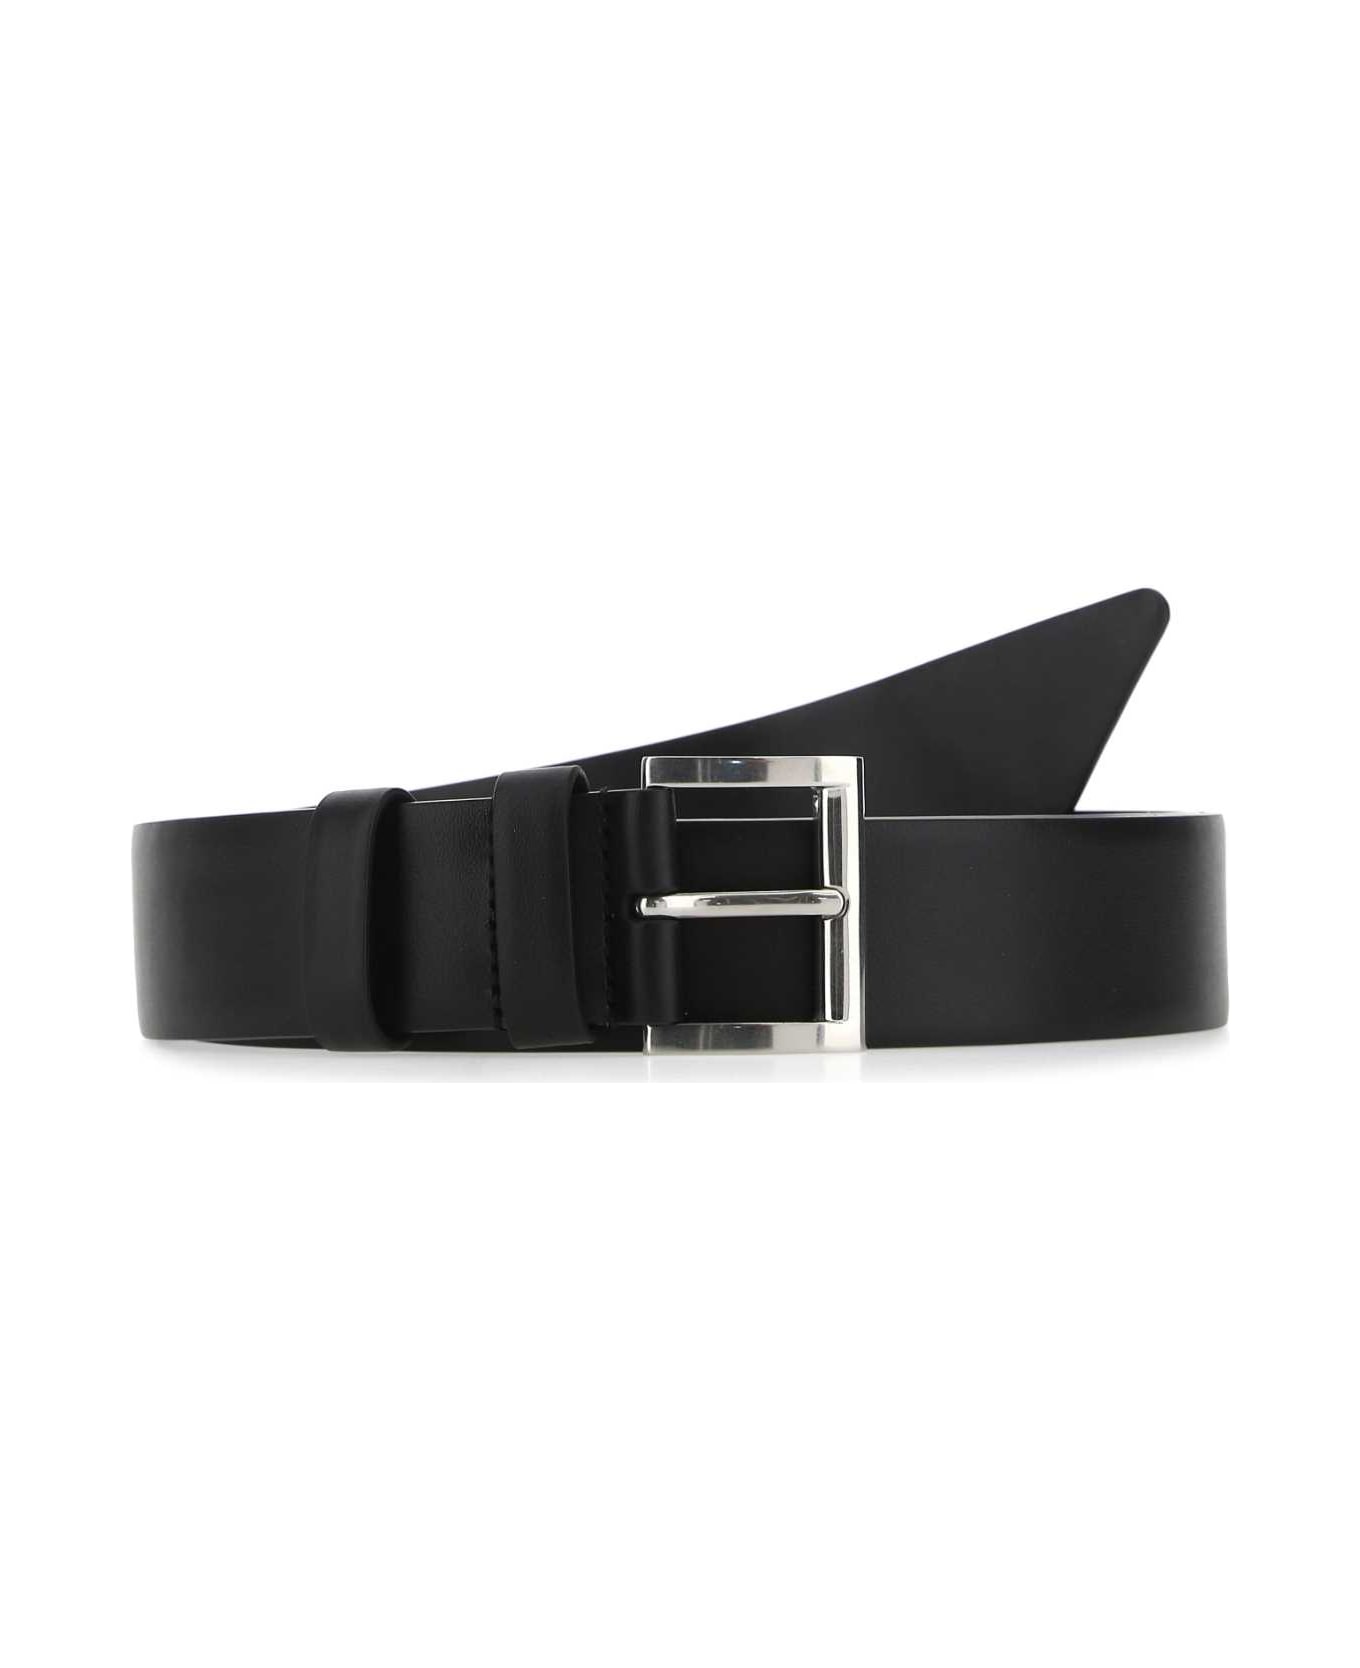 Prada Black Leather Wallet - F0002